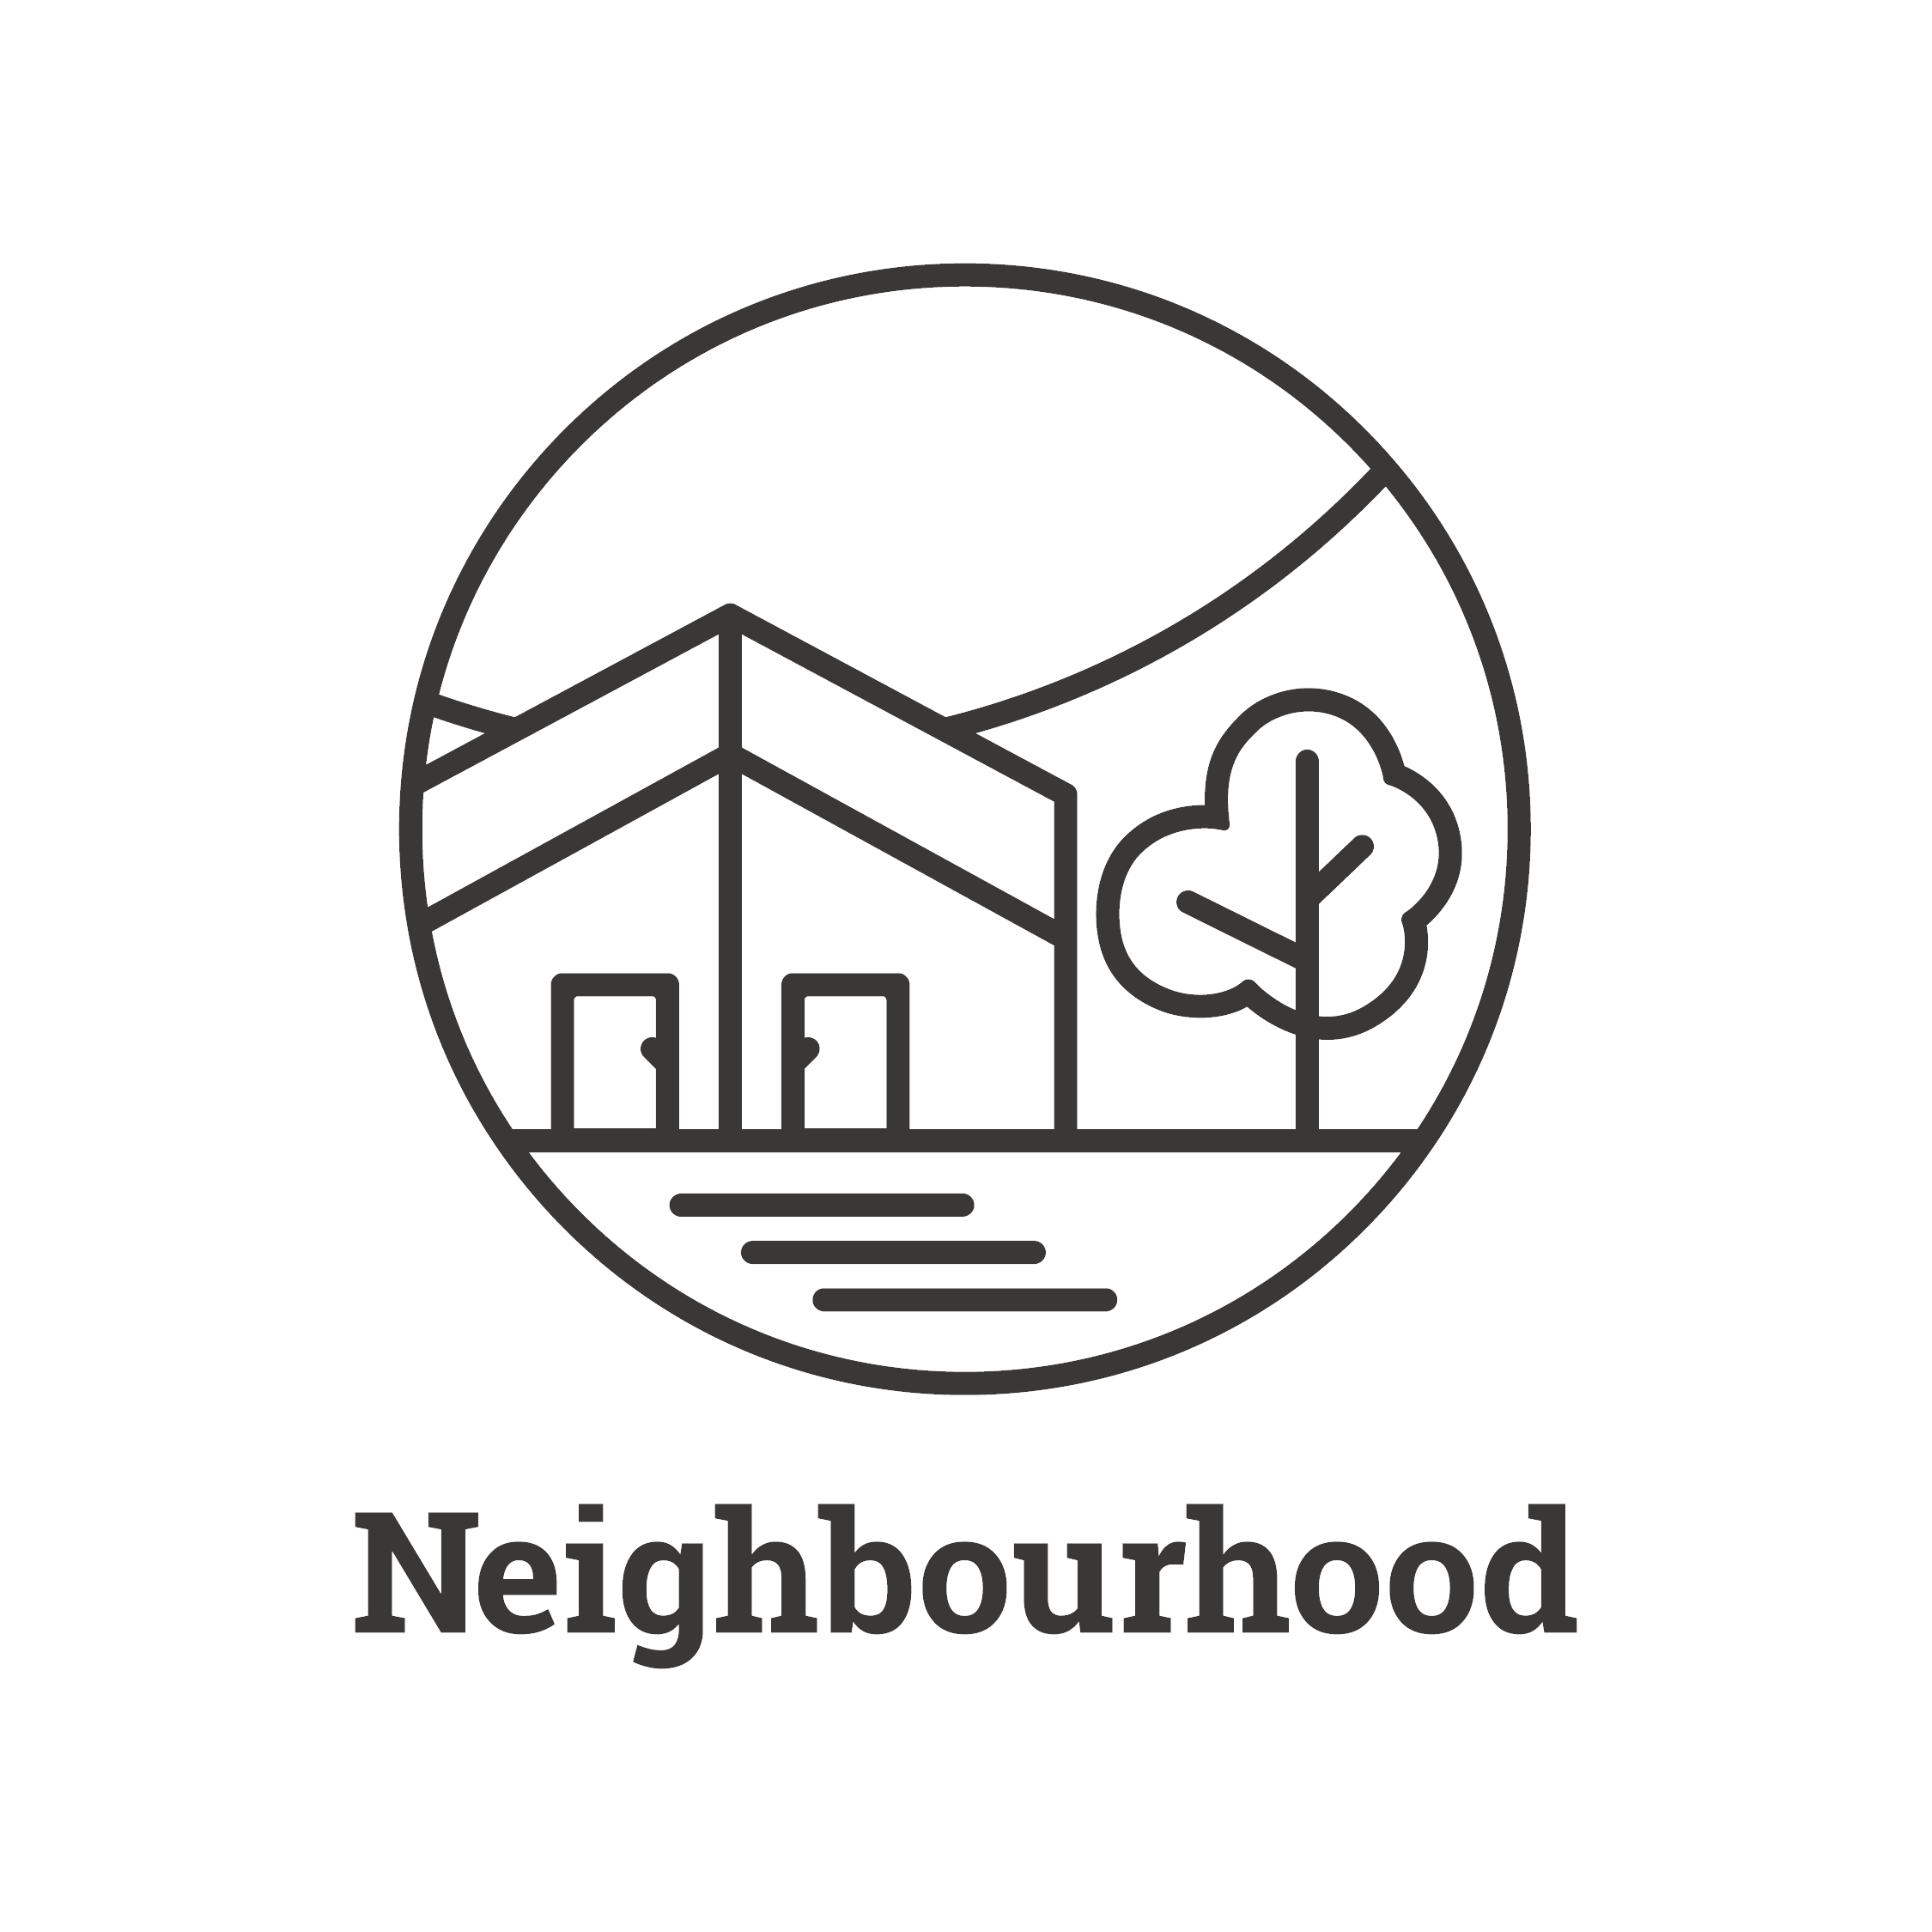 2-Neighbourhood-Master-Sheet-RGB-01 copy.png